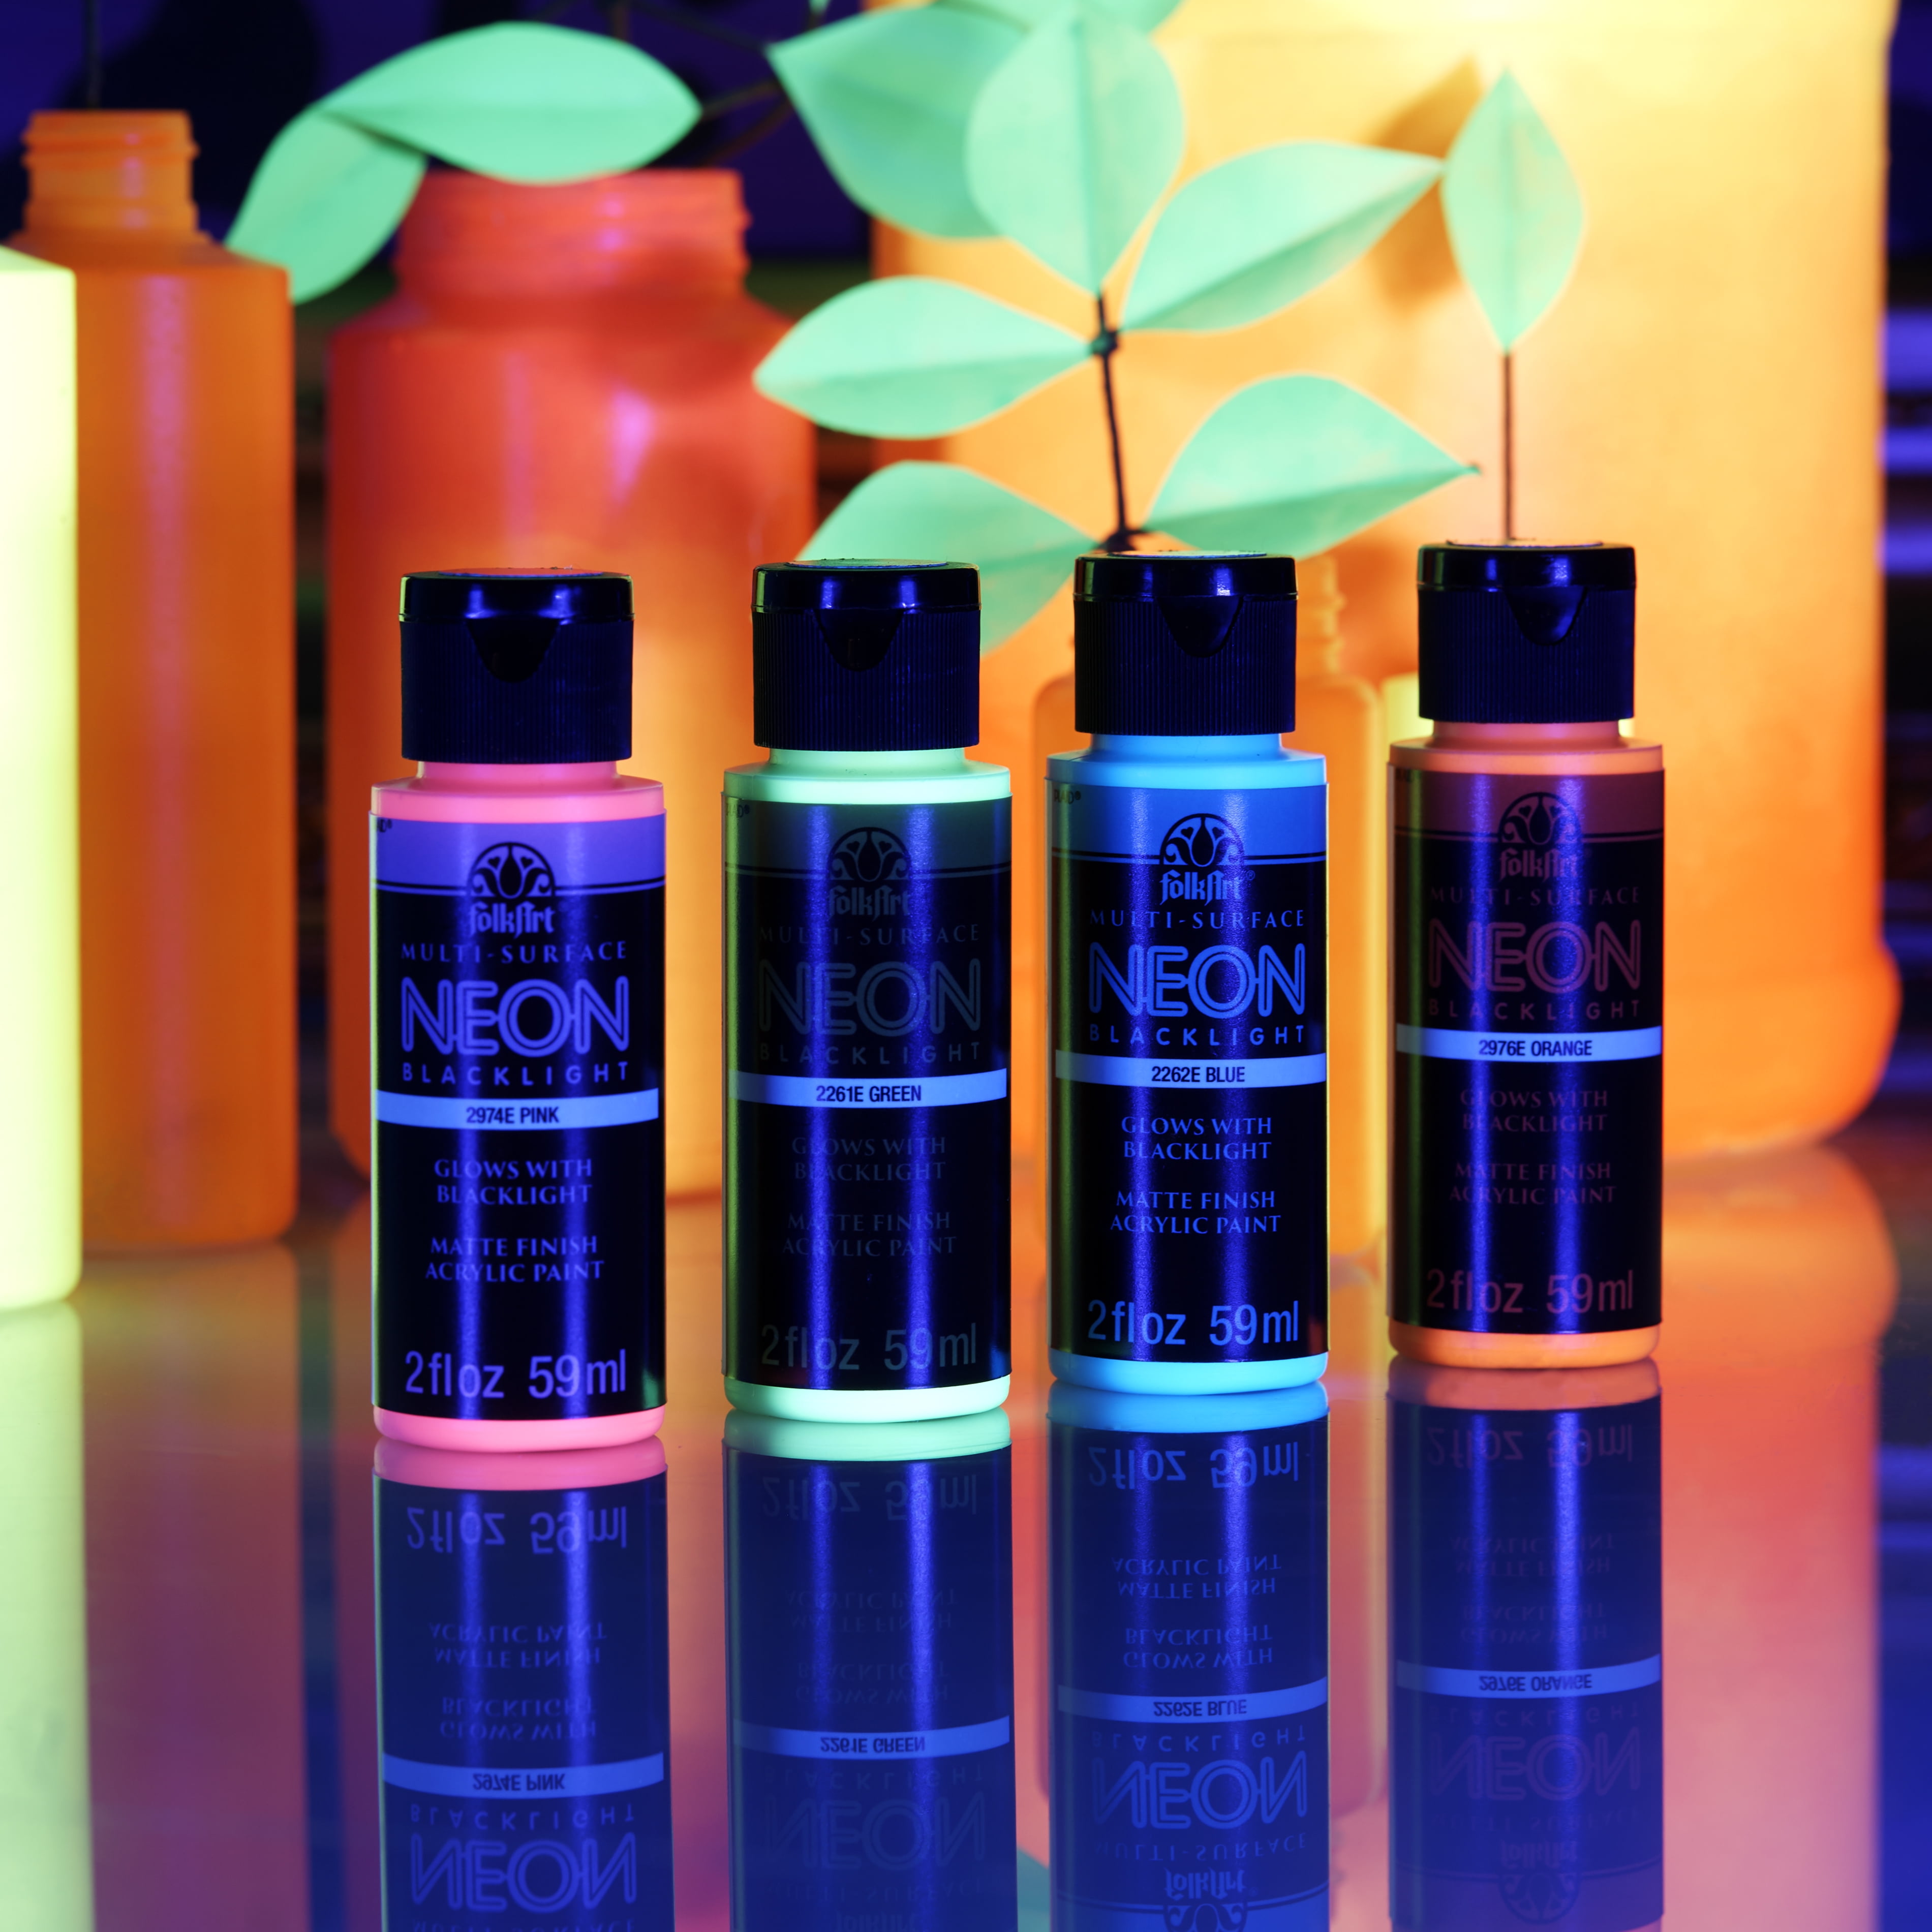 Neon Acrylic Paint Set - 8 Colors, Vibrant Finish - 2 oz, 8 Fl Oz (Pack of  8)